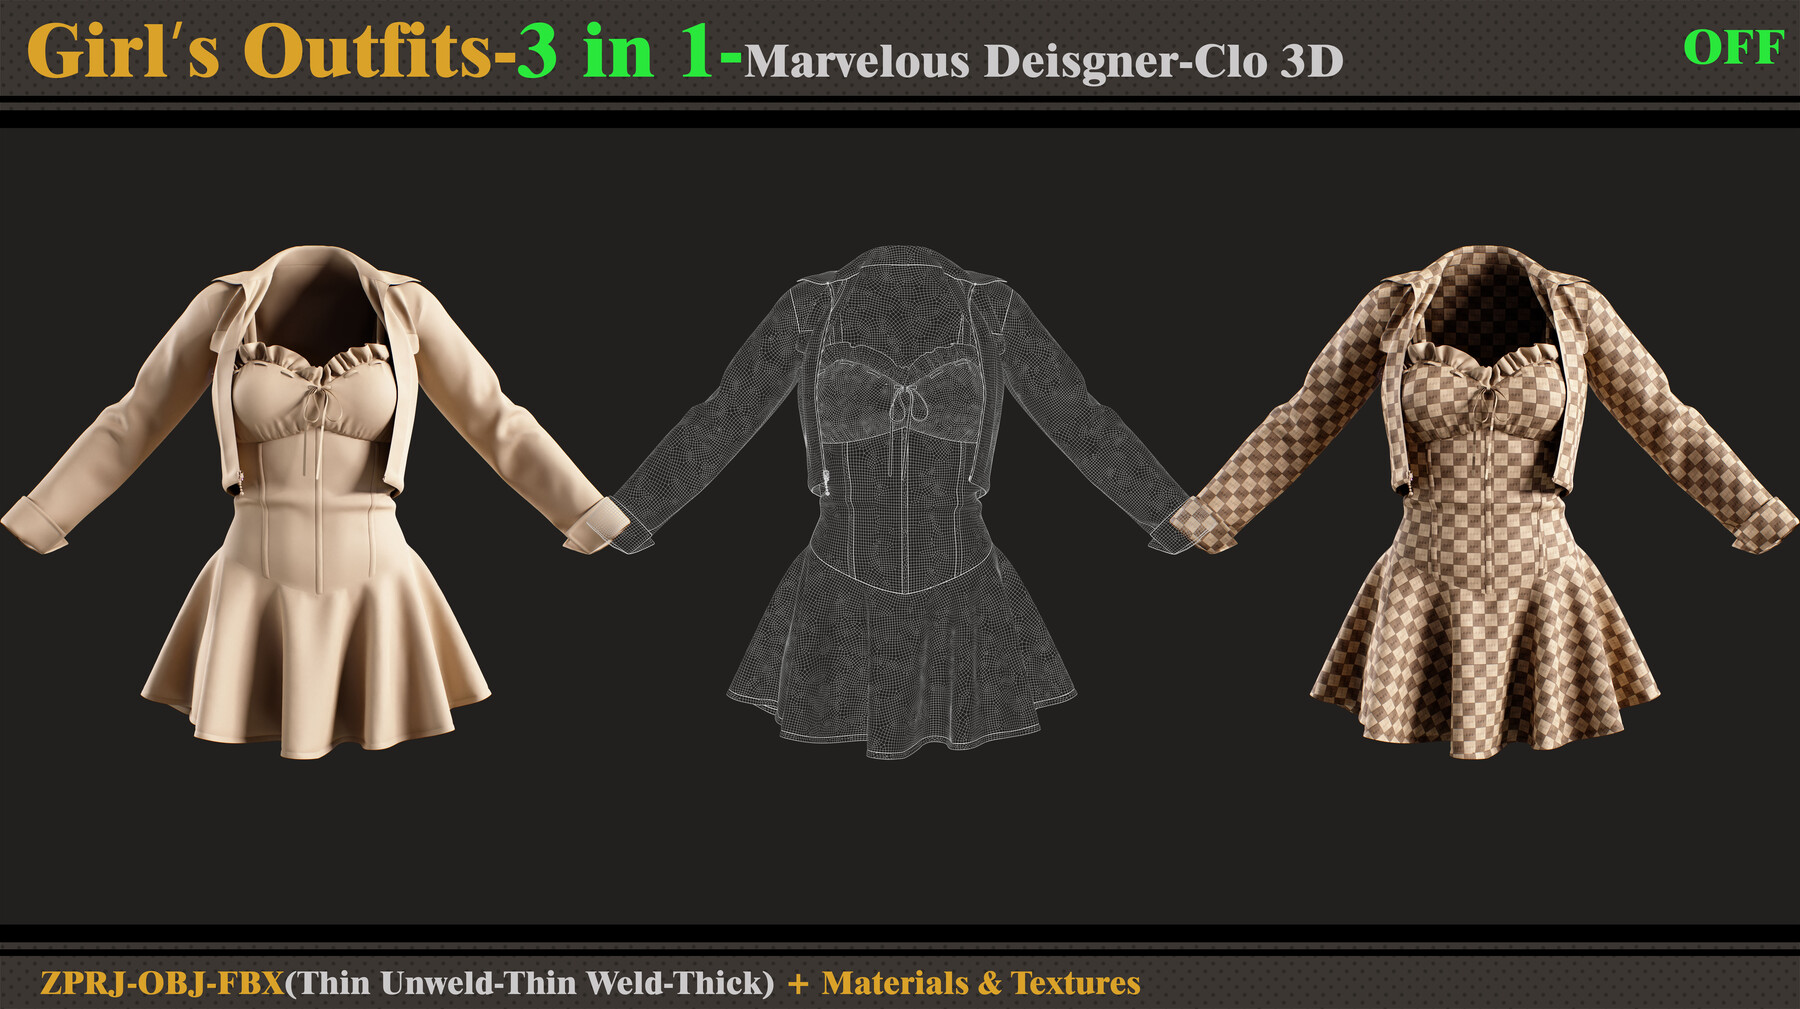 ArtStation - 3 in 1 Girl's Outfits- MD/Clo3d (OBJ + FBX +ZPRJ ...